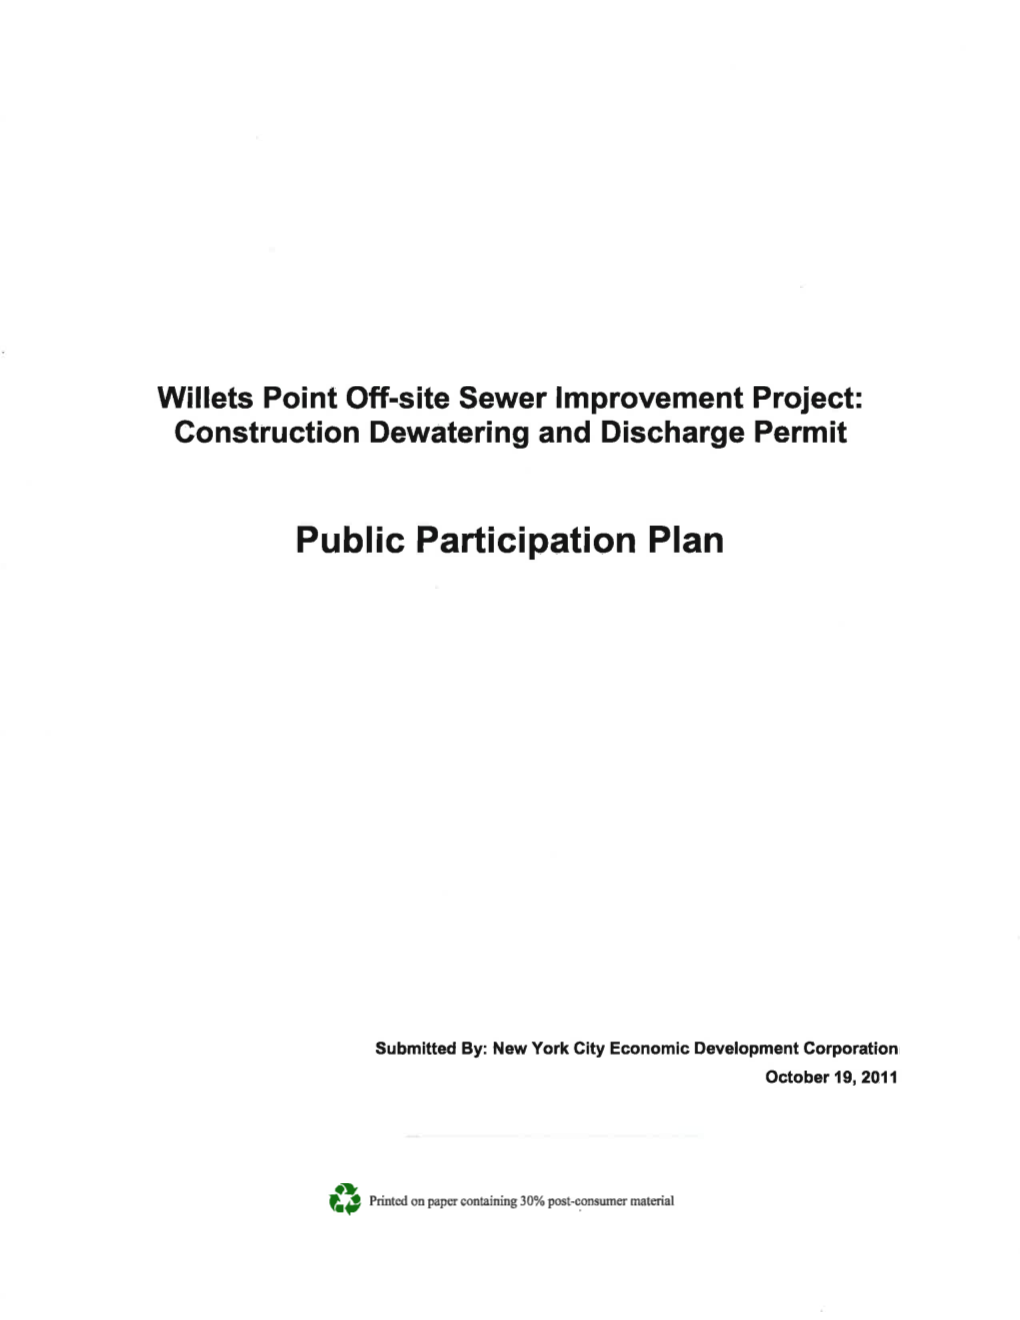 Willets Point Off-Site Sewer Improvement Project: Public Participation Plan